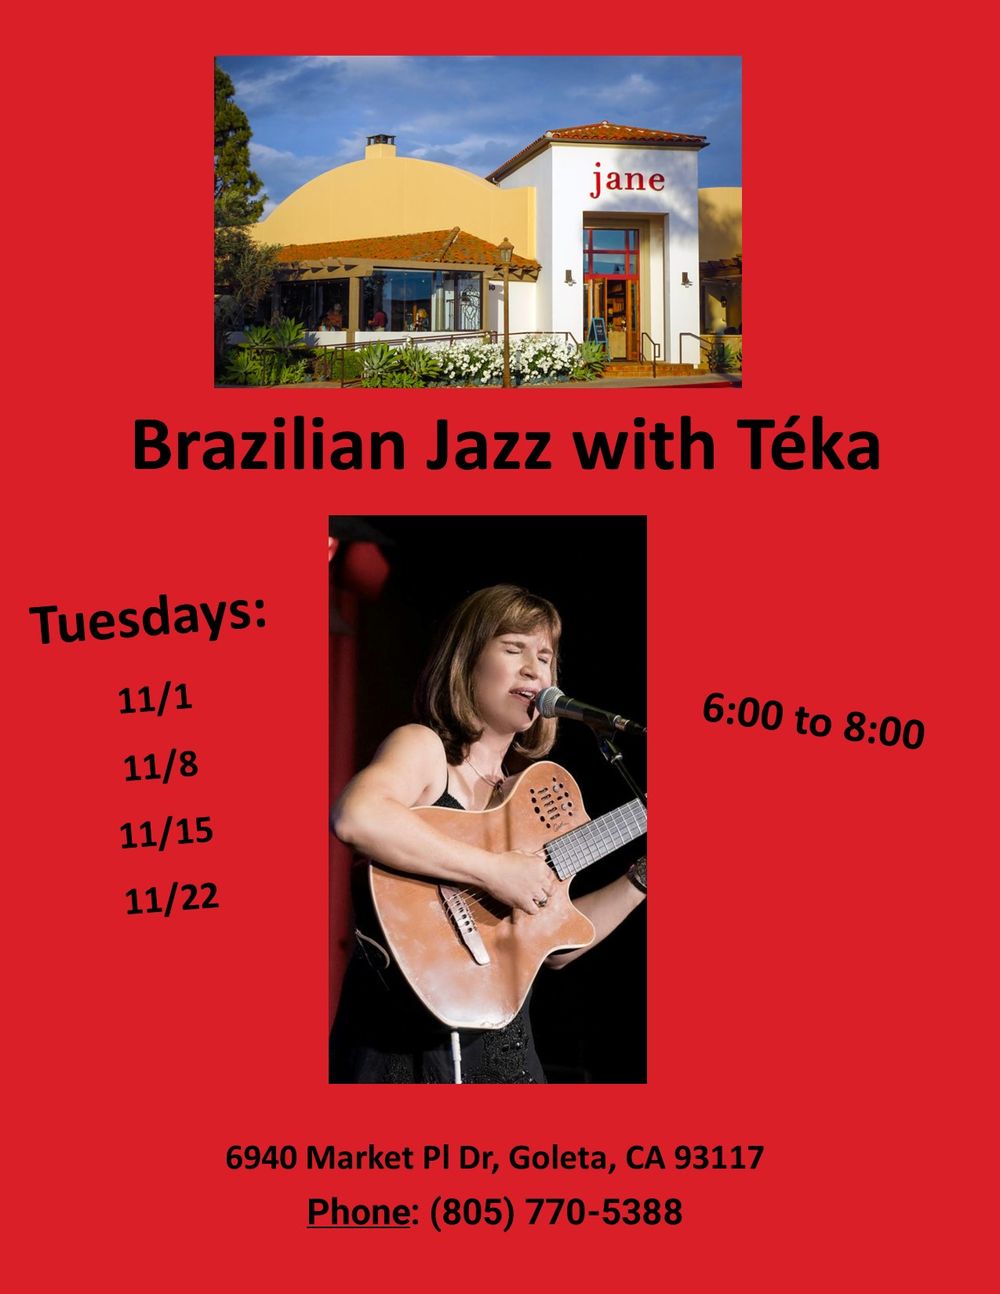 Great American cuisine, friendly staff and Brazilian Jazz with Téka on Tuesdays